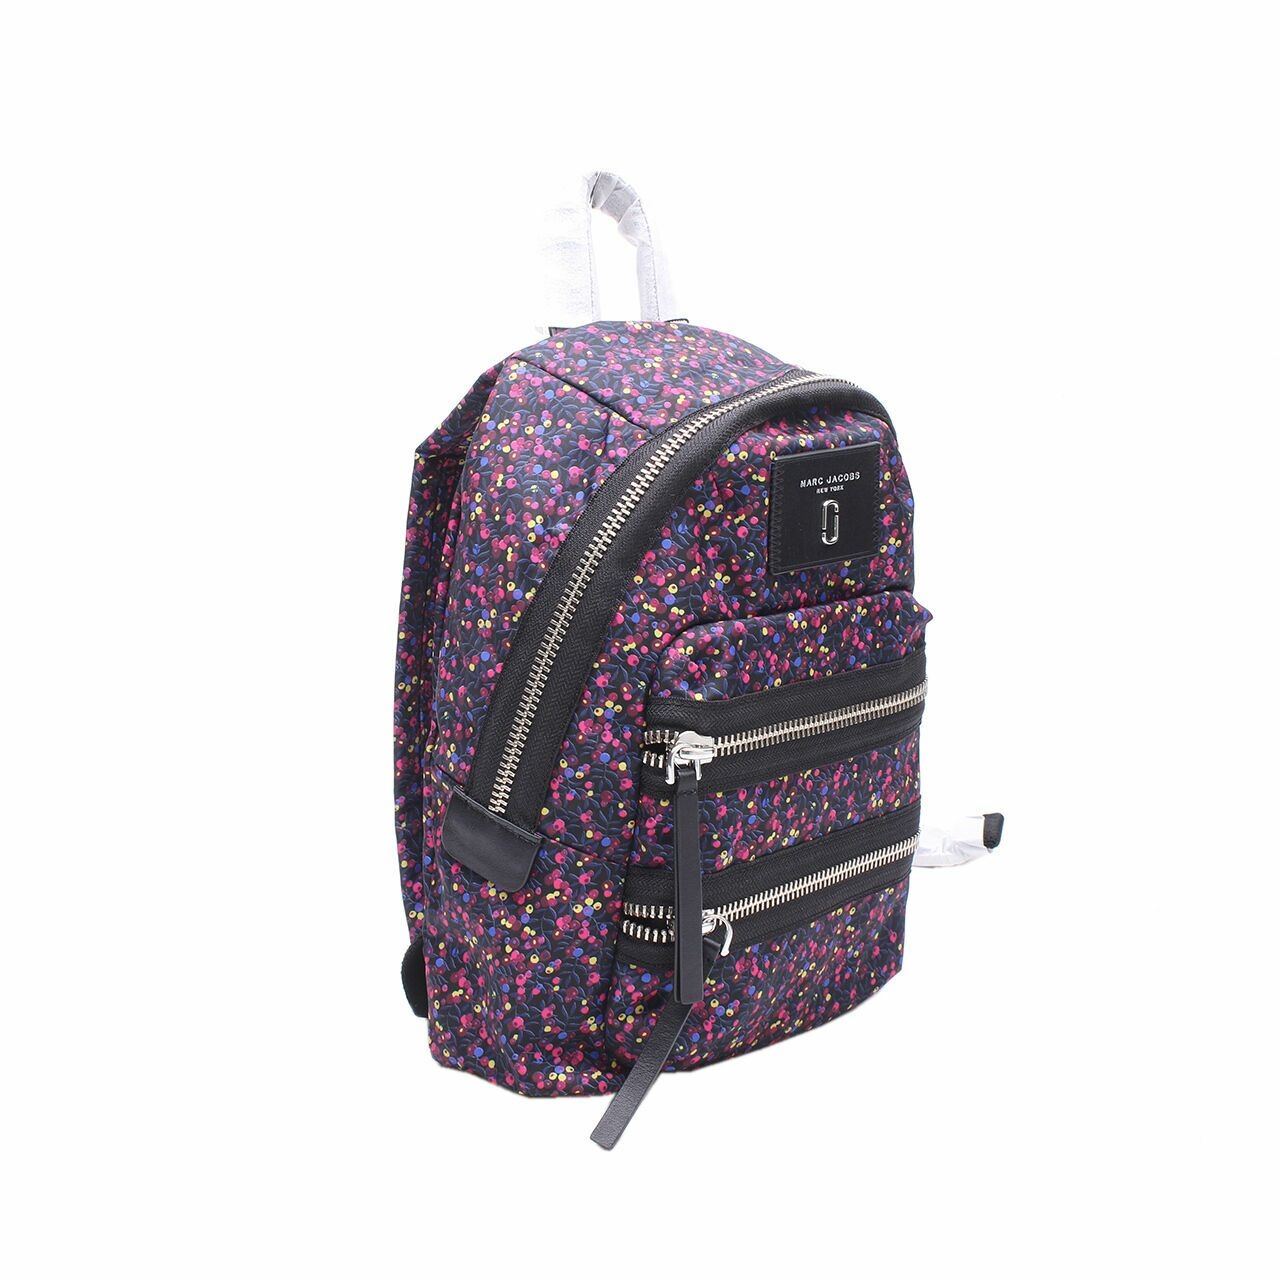 Marc Jacobs Multi Color Floral Backpack